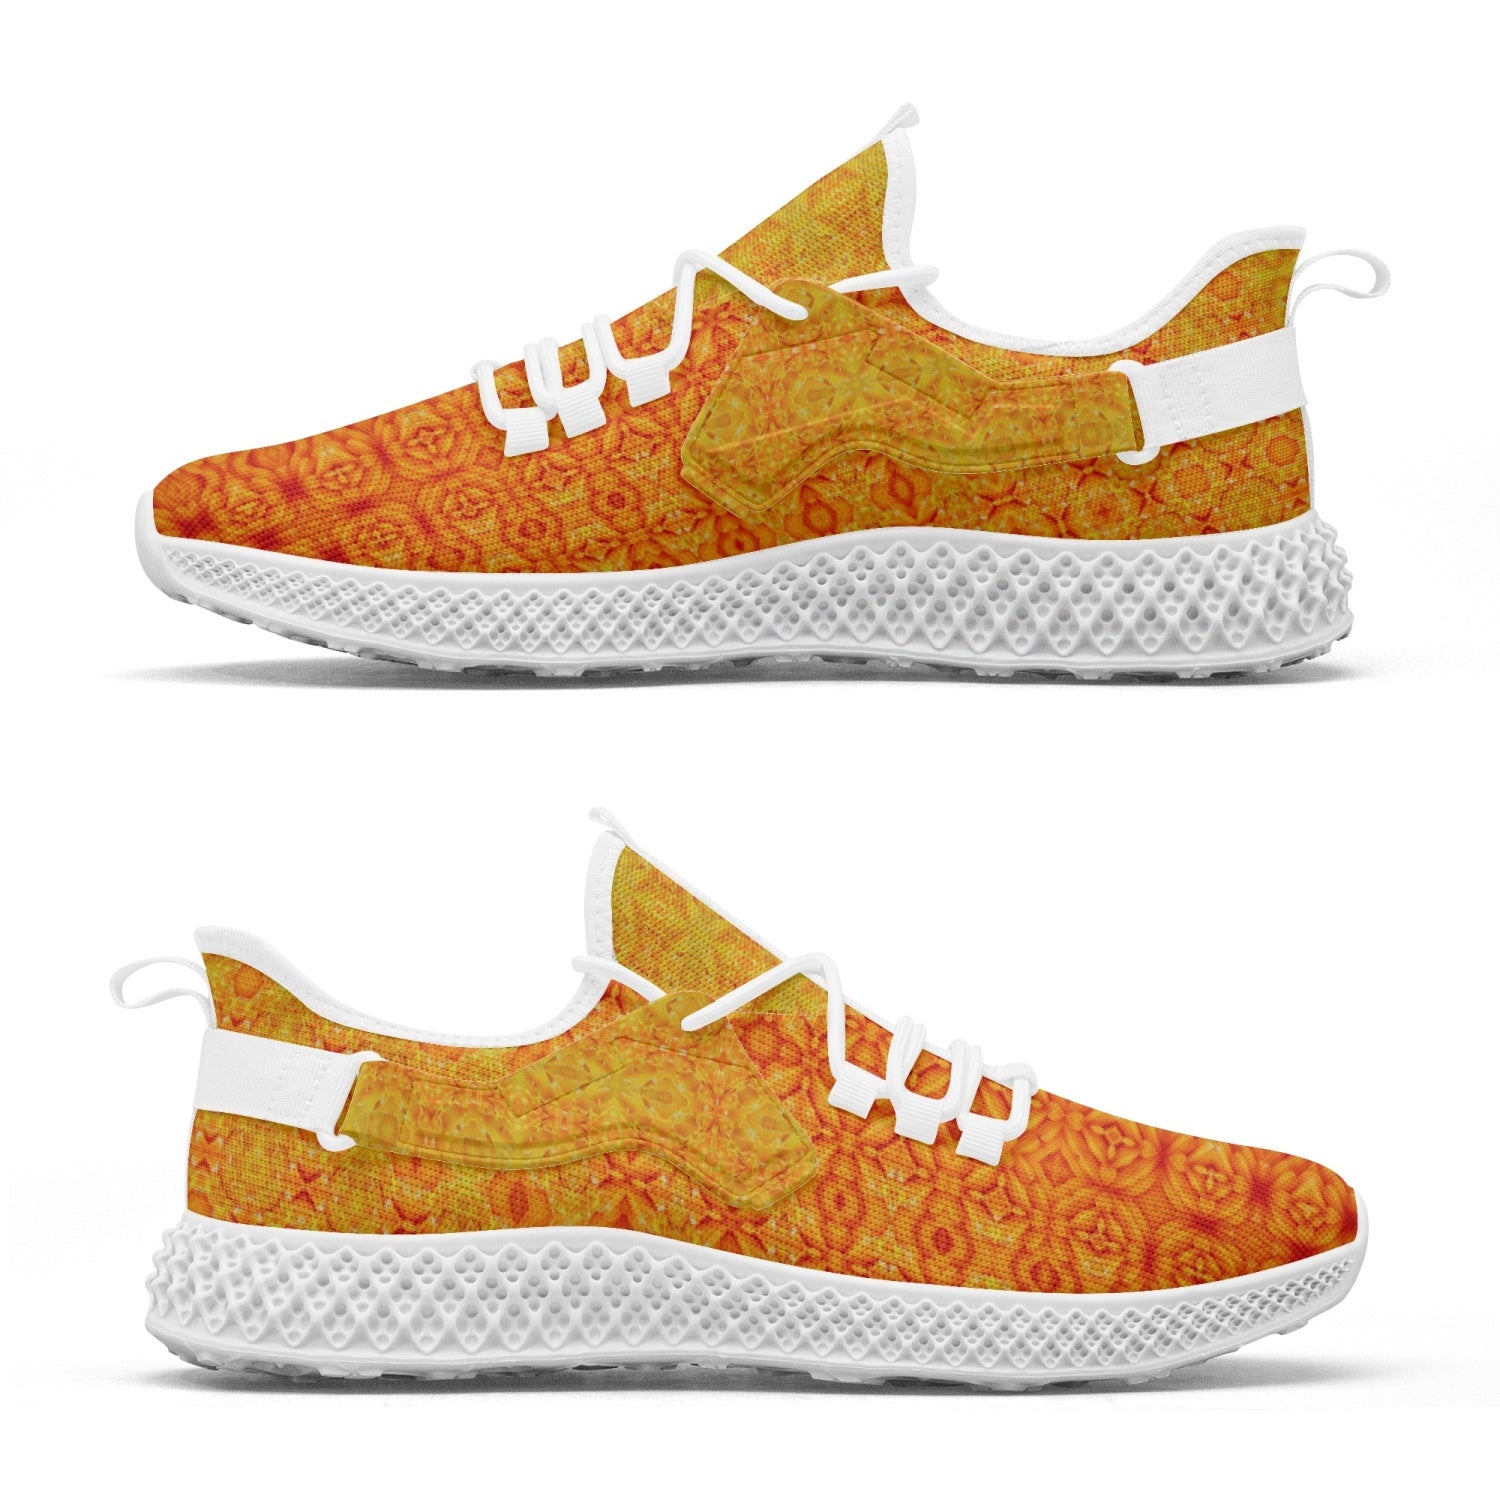 Solar Plexus Chacra Net Style Mesh Knit Sneakers, by Sensus Studio Design